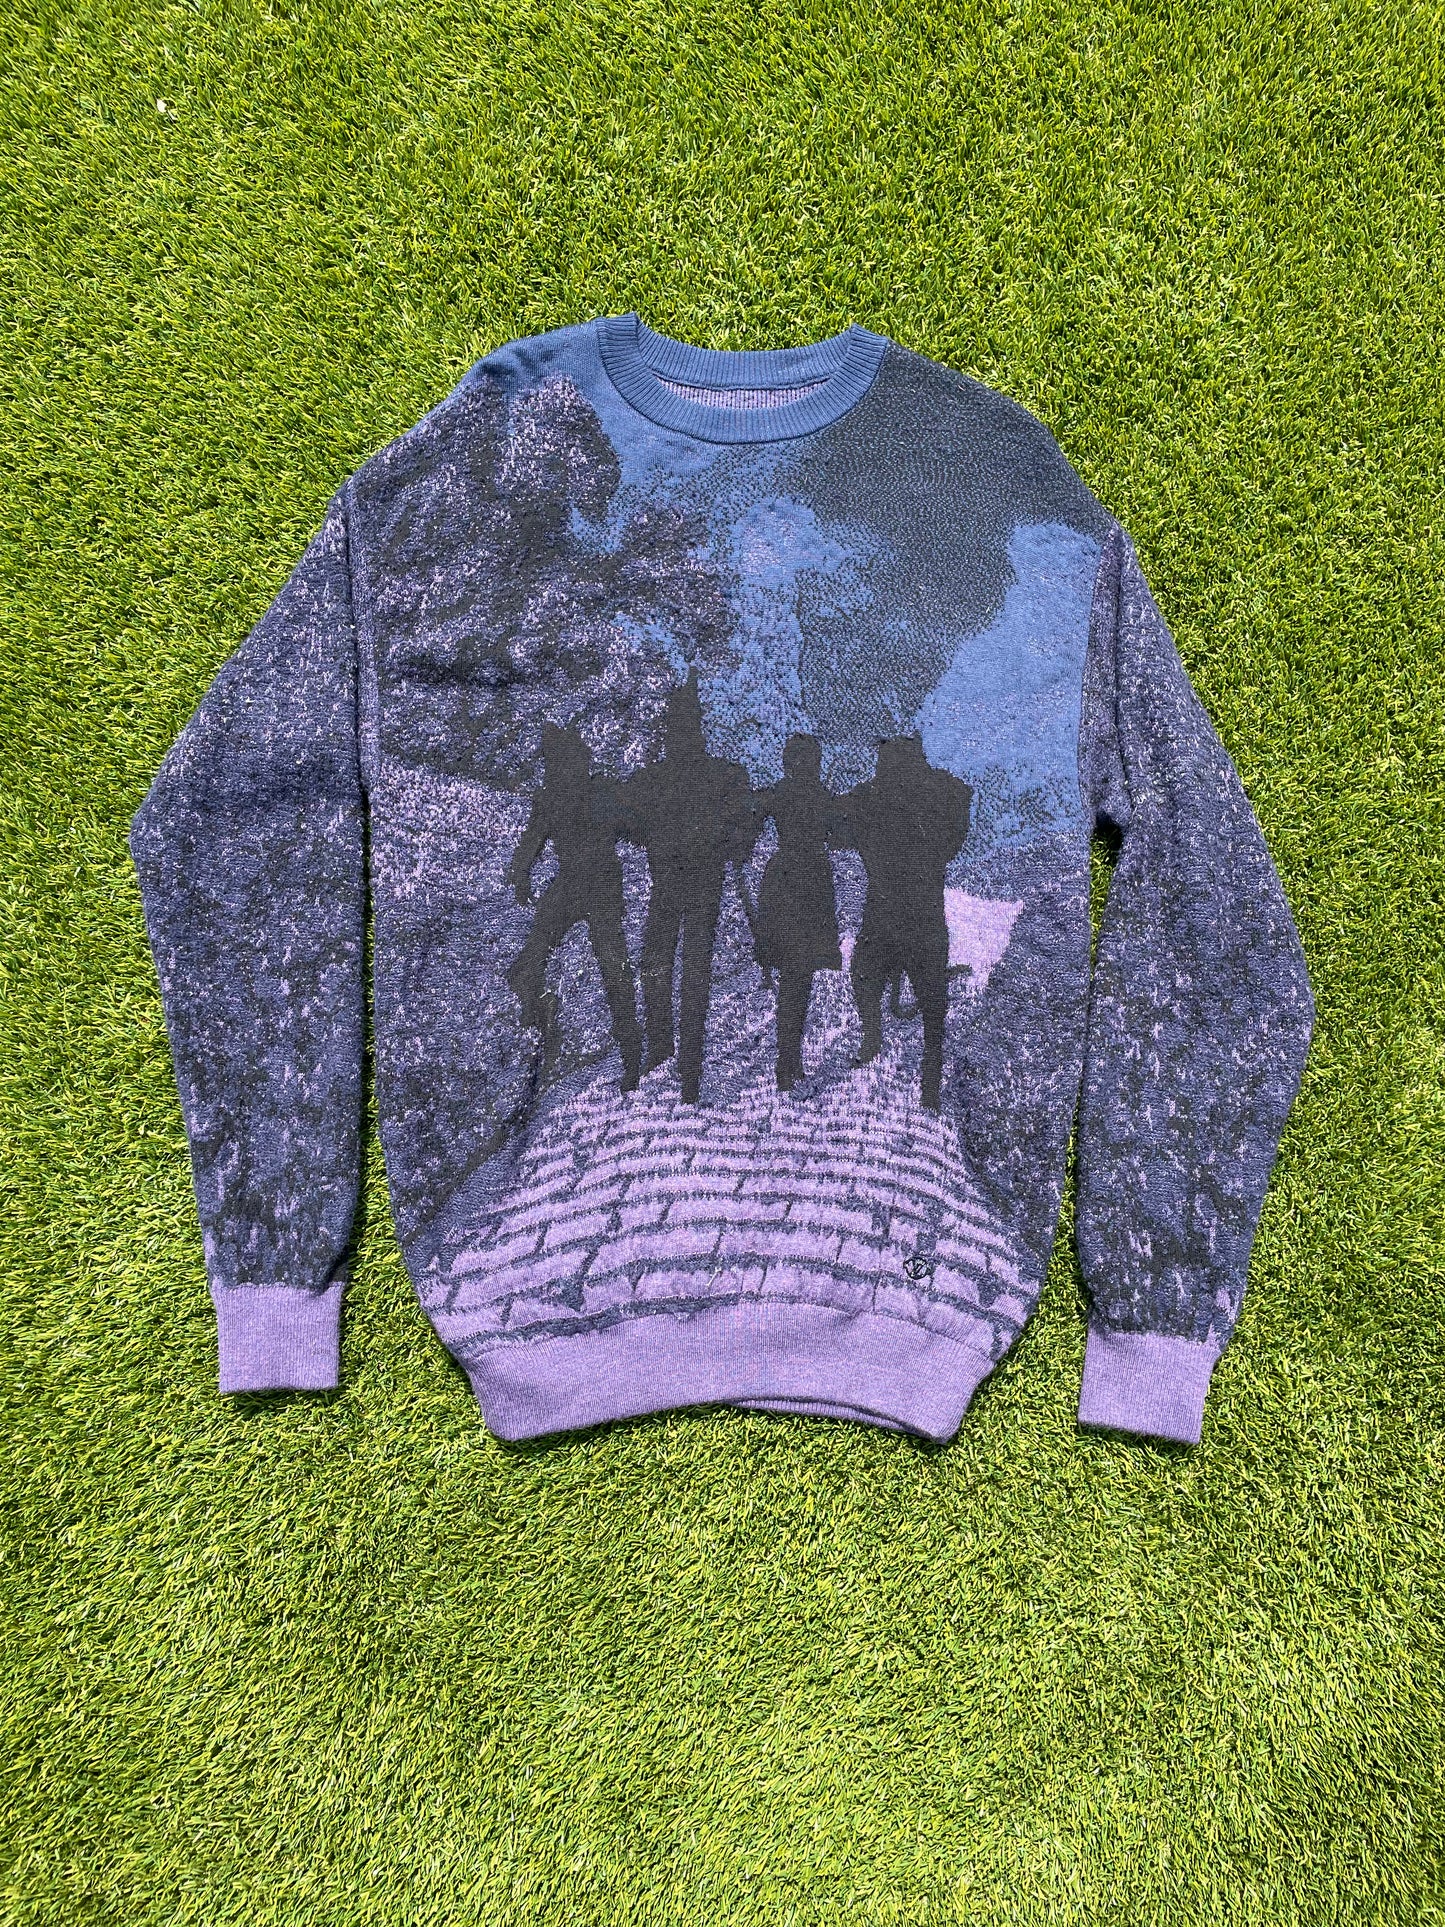 Louis Vuitton Wizard Of Oz Sweater Priced